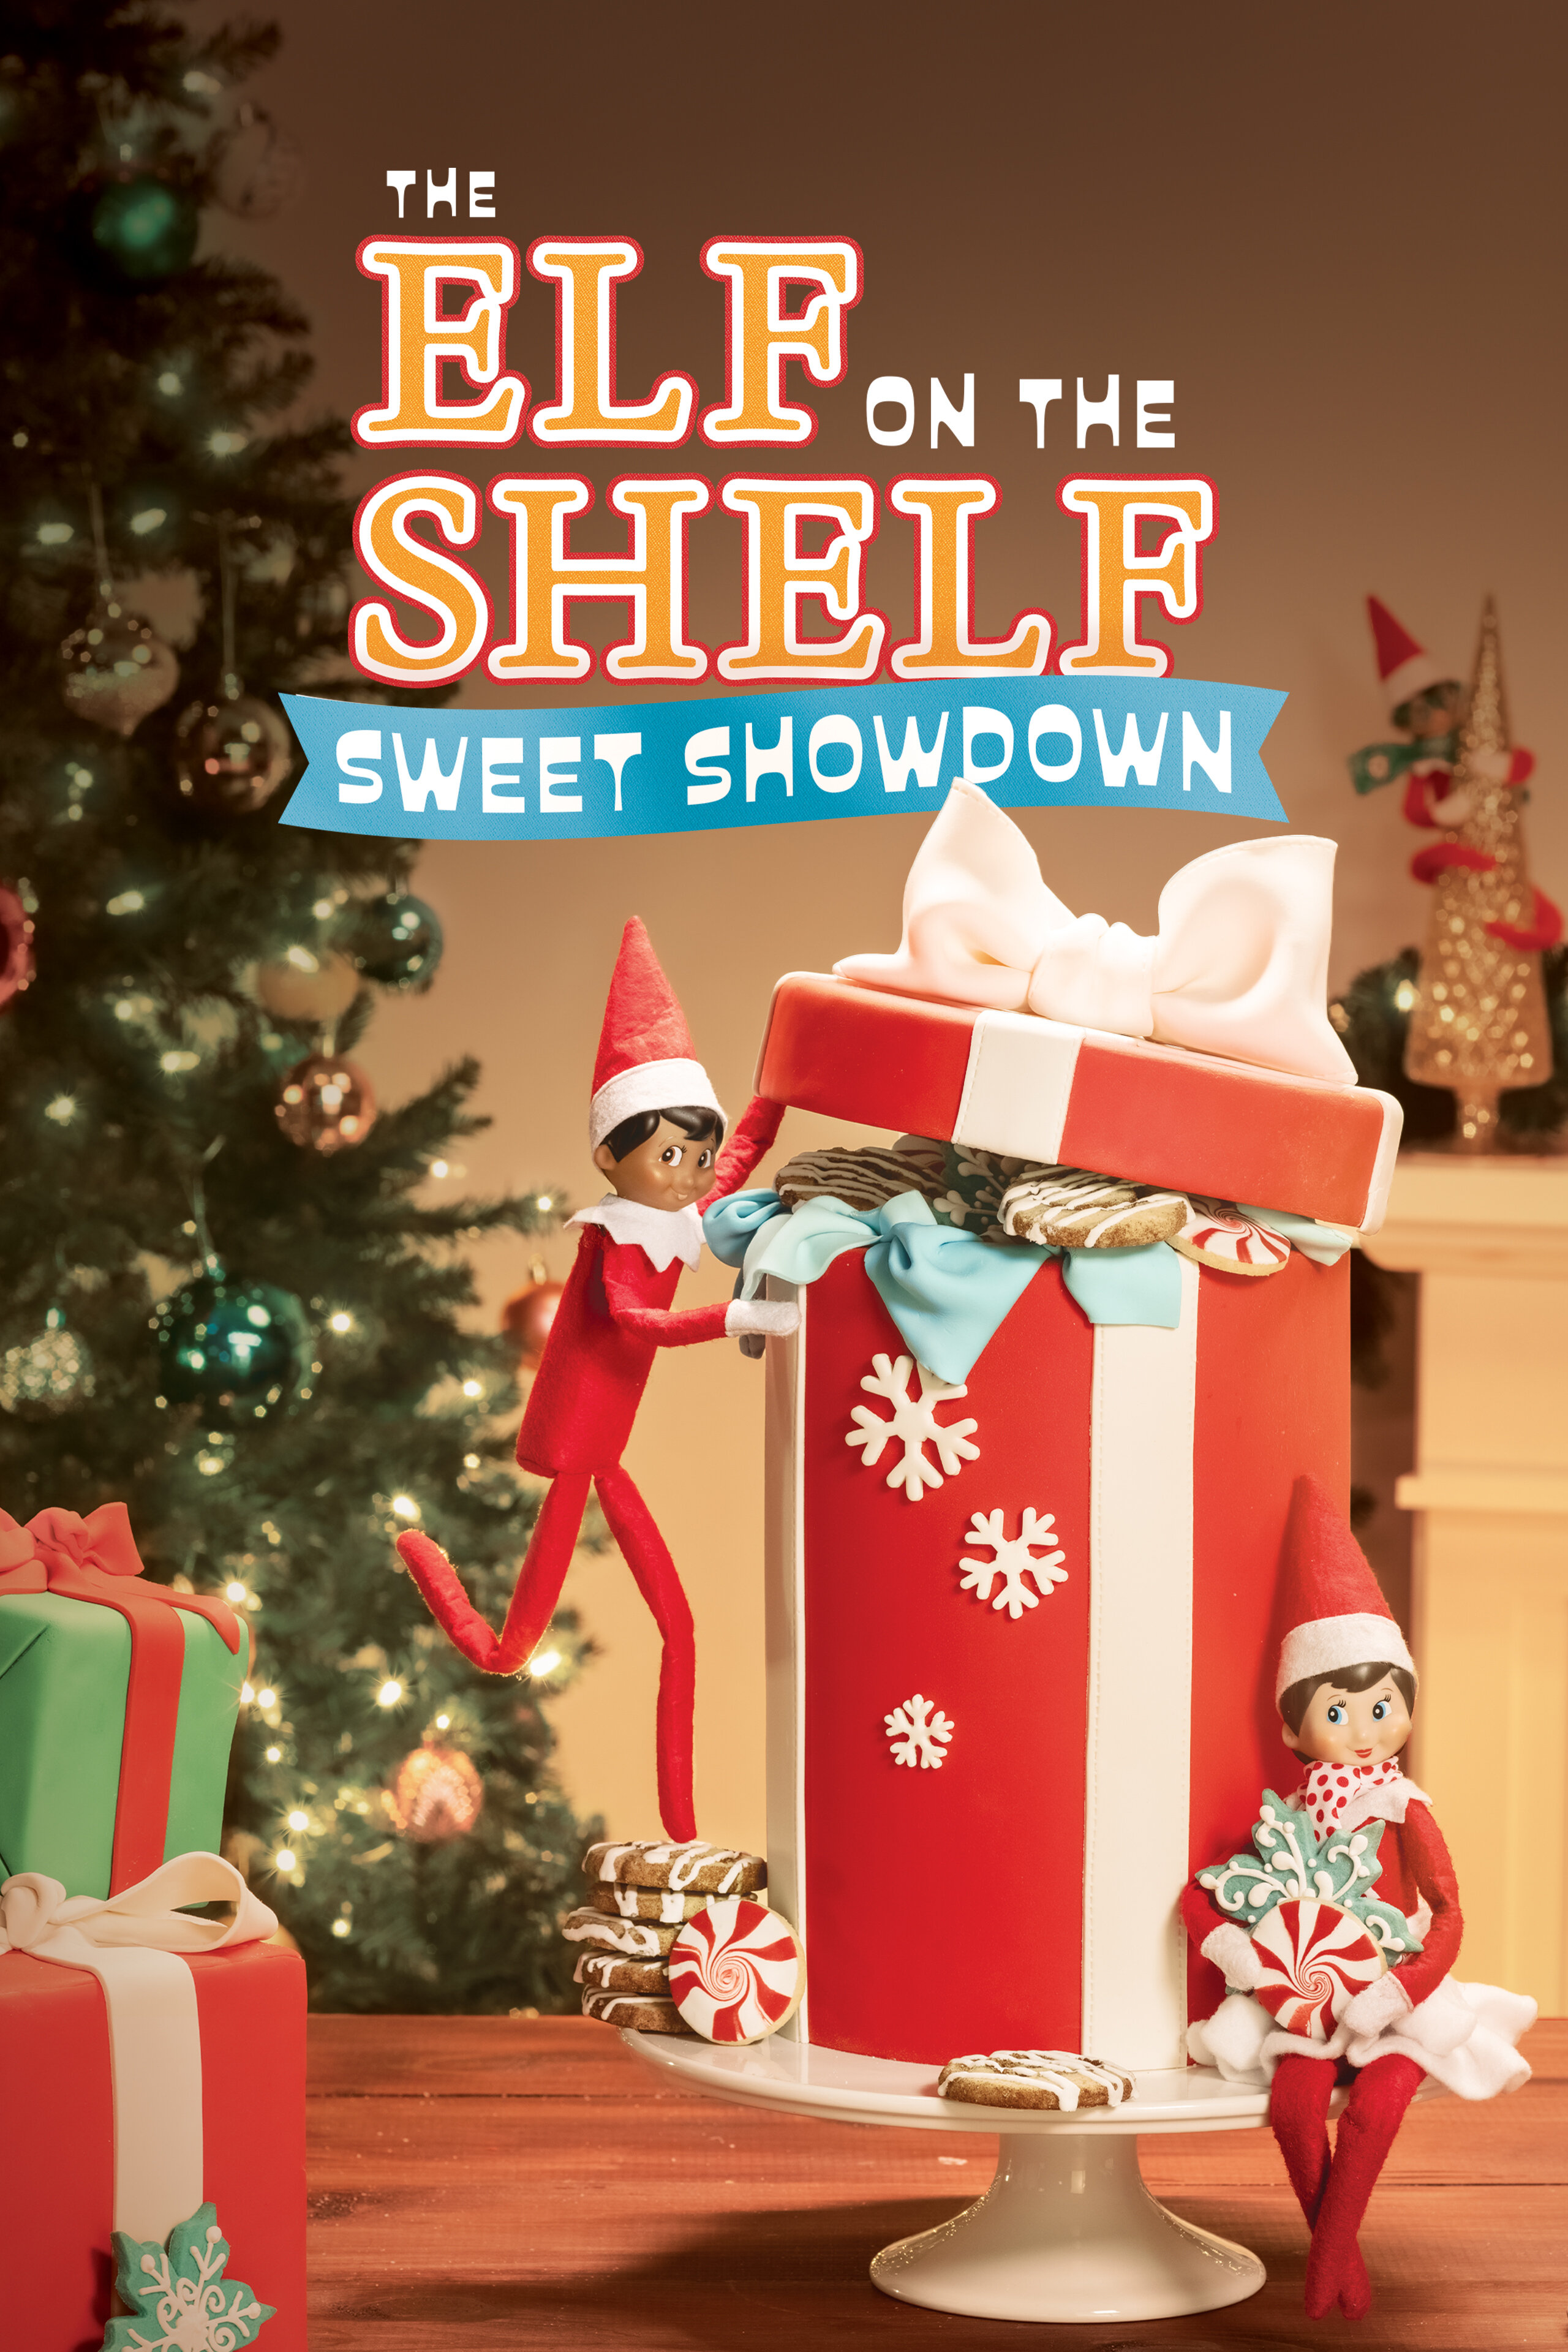 The Elf on the Shelf: Sweet Showdown | TVmaze